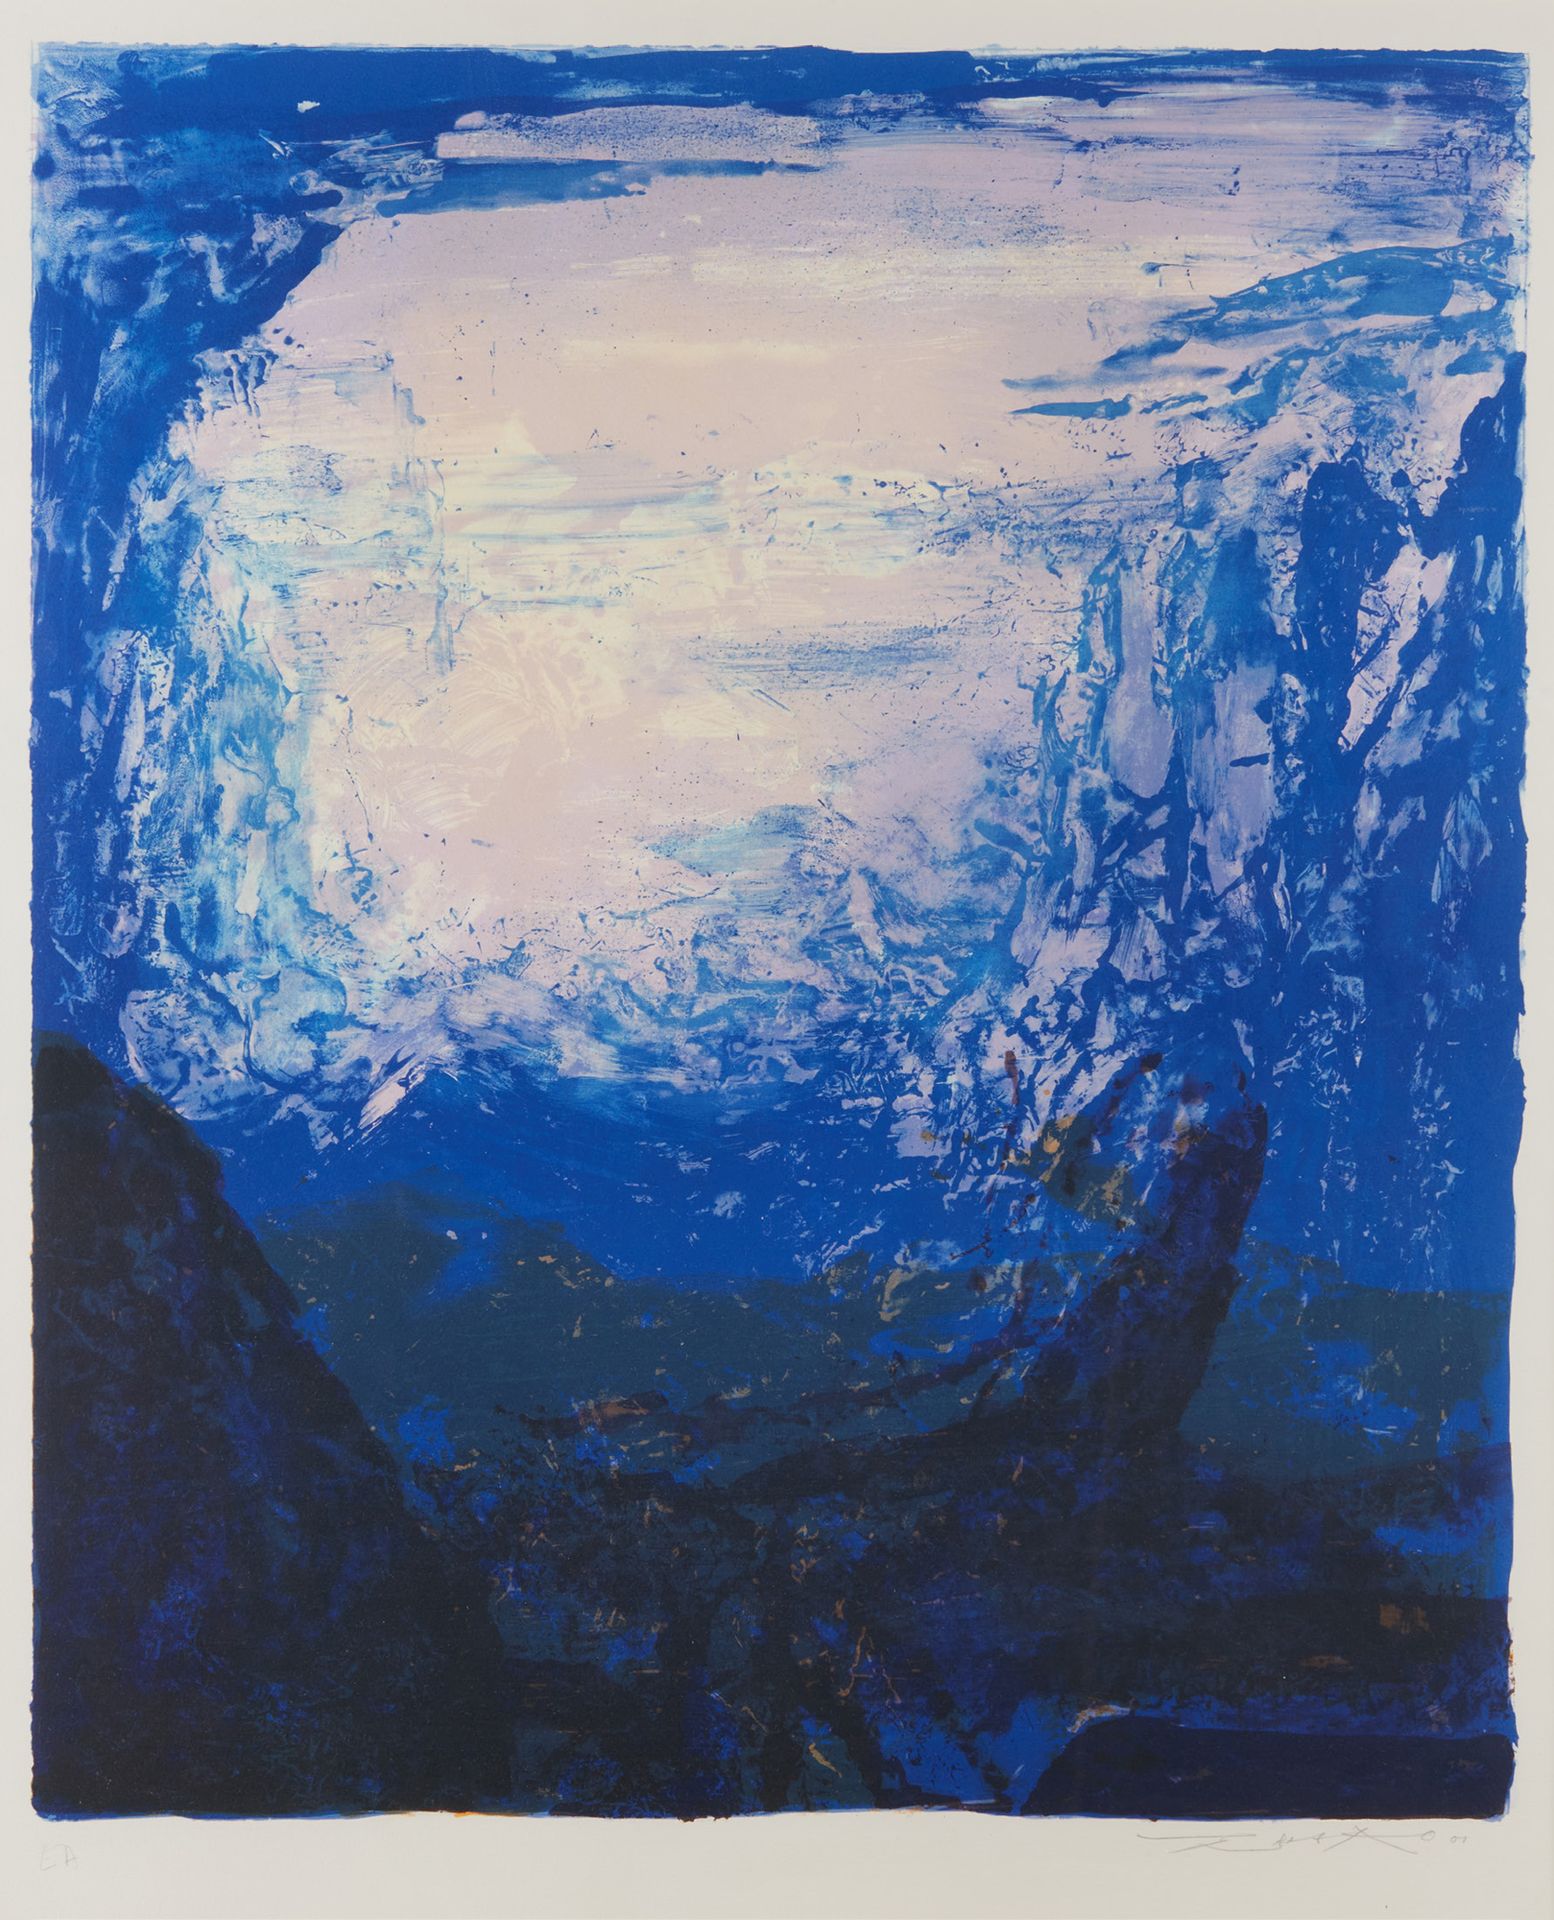 ZAO WOU-KI (1920 - 2013) Print, blue landscape composition.
Signed lower right.
&hellip;